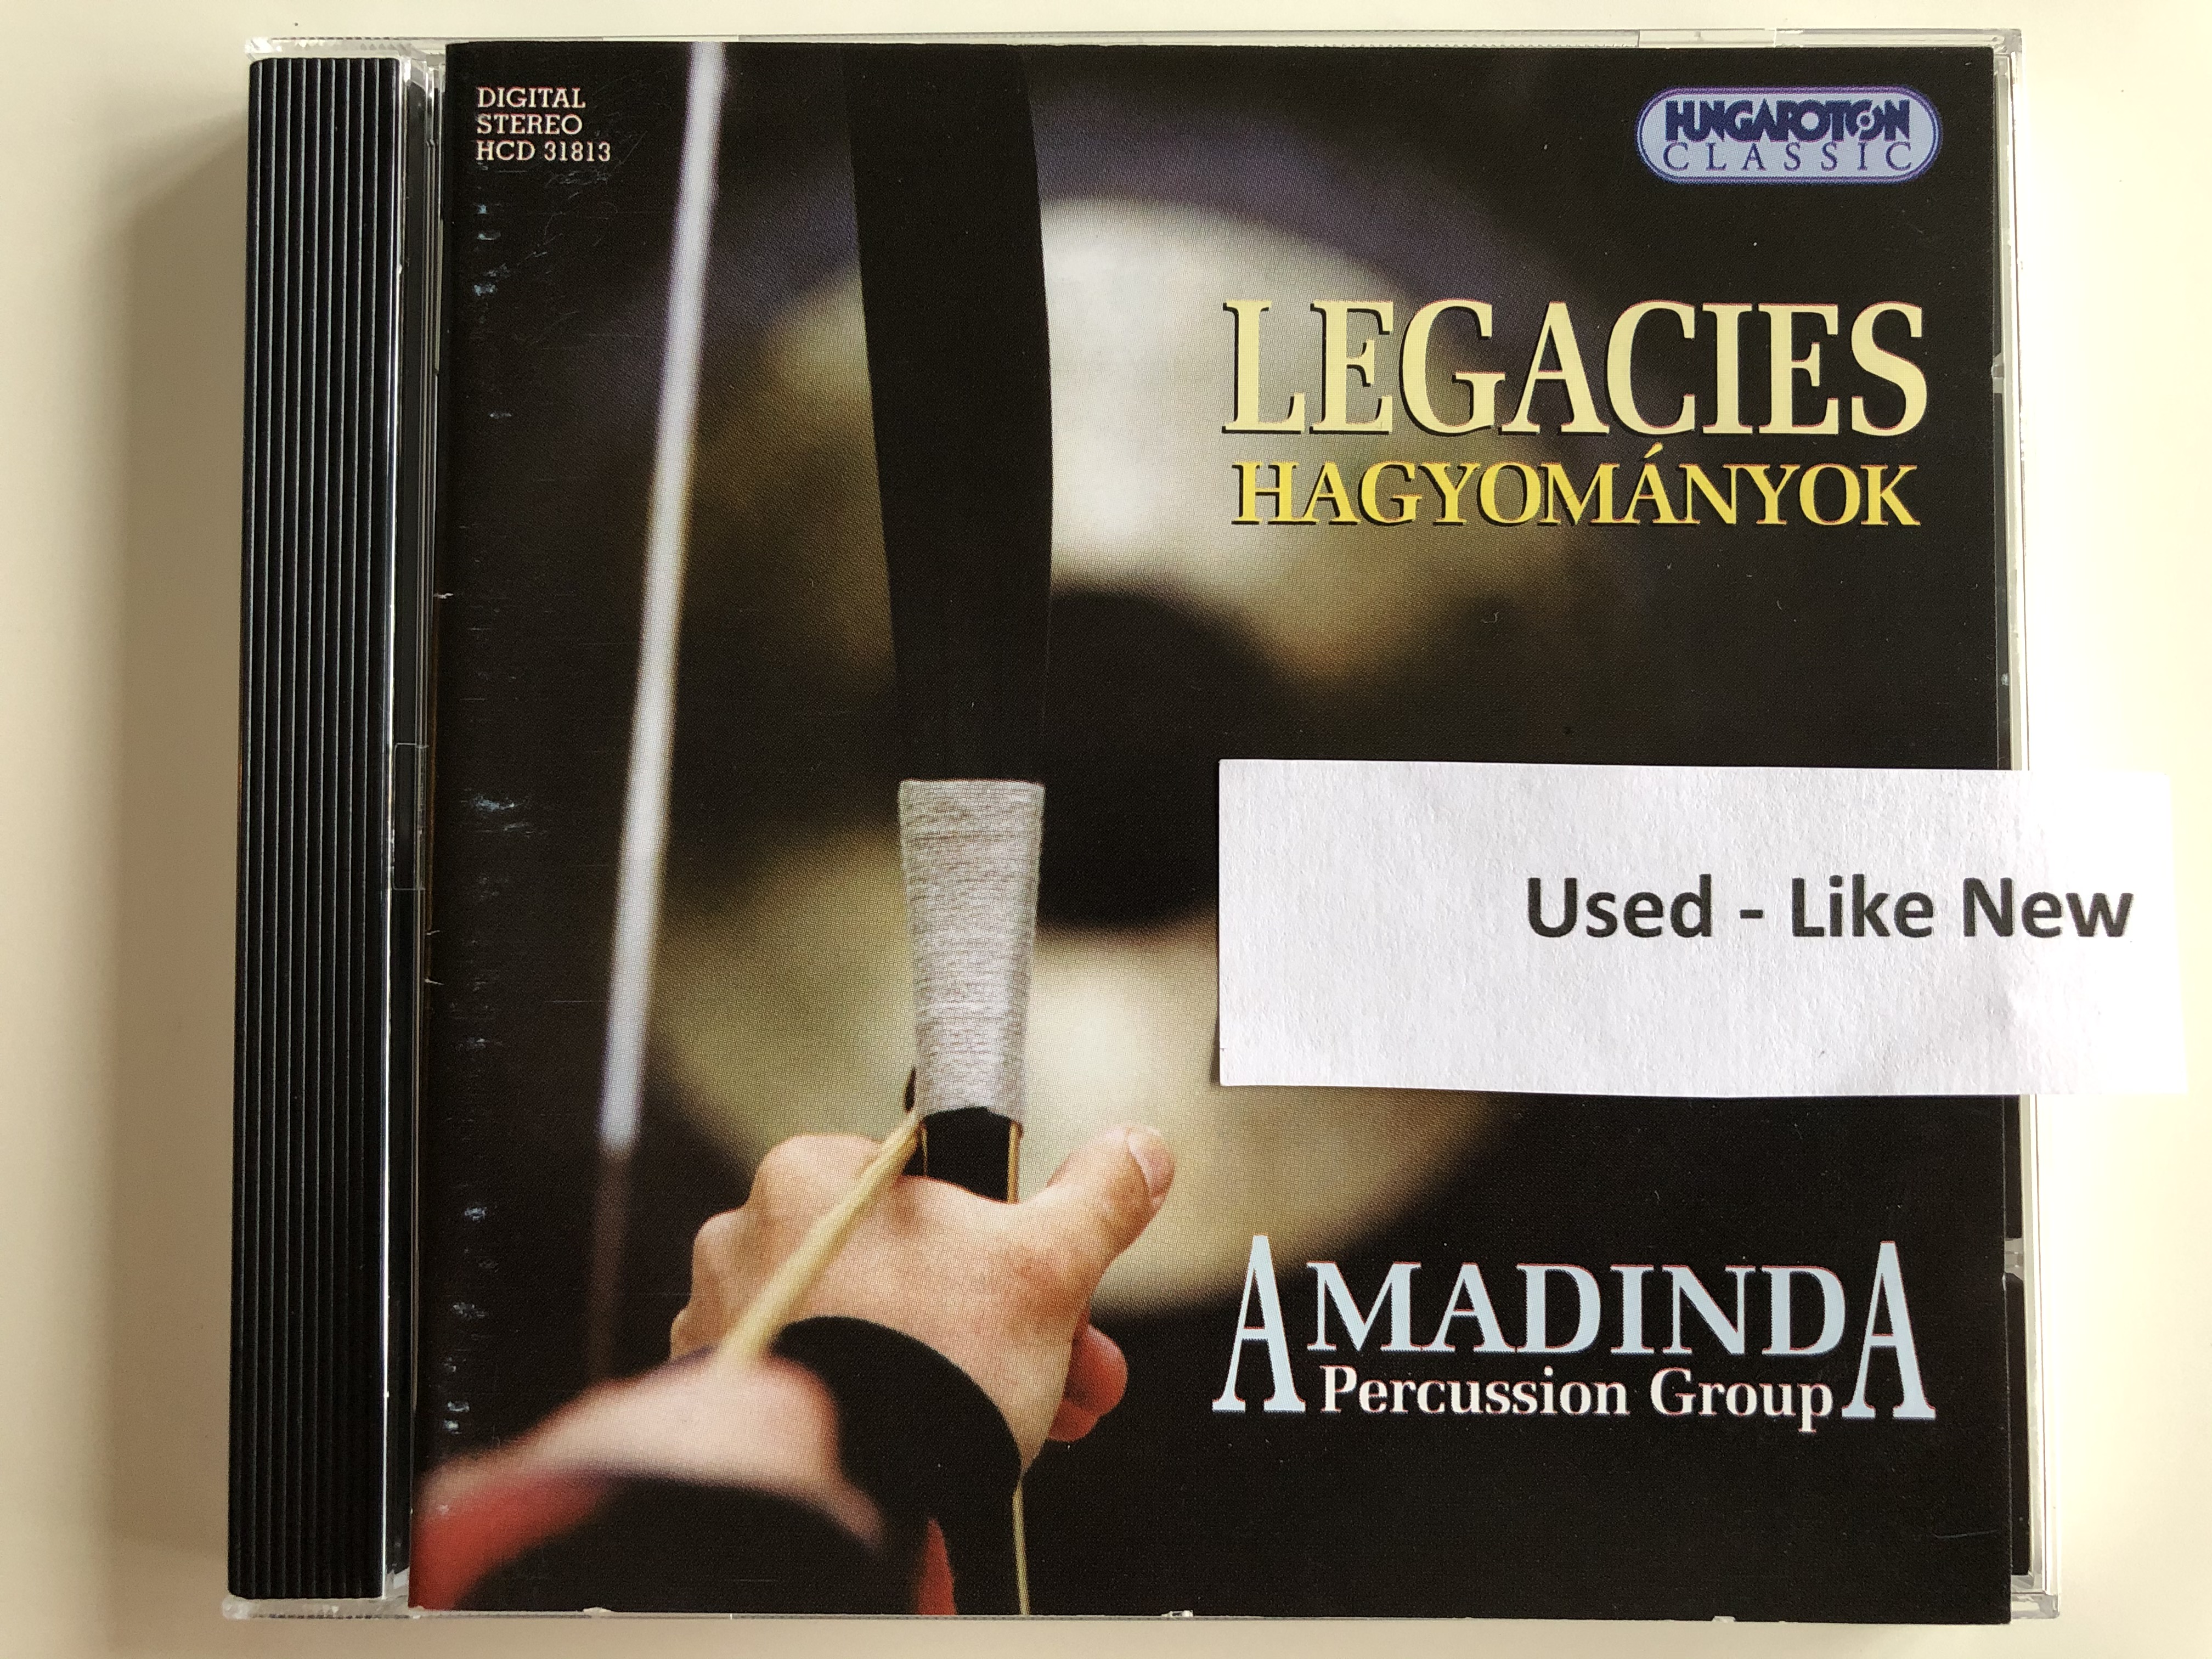 legacies-hagyom-nyok-amadinda-percussion-group-hungaroton-classic-audio-cd-1998-stereo-hcd-31813-1-.jpg